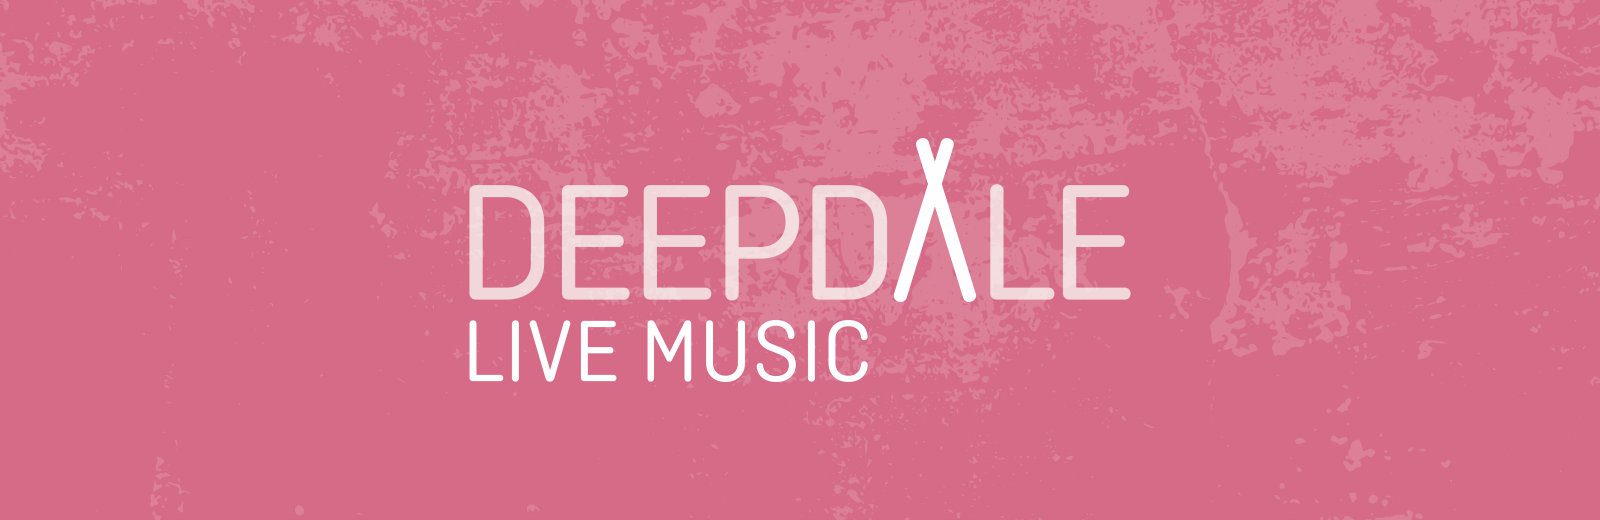 Deepdale Live Music